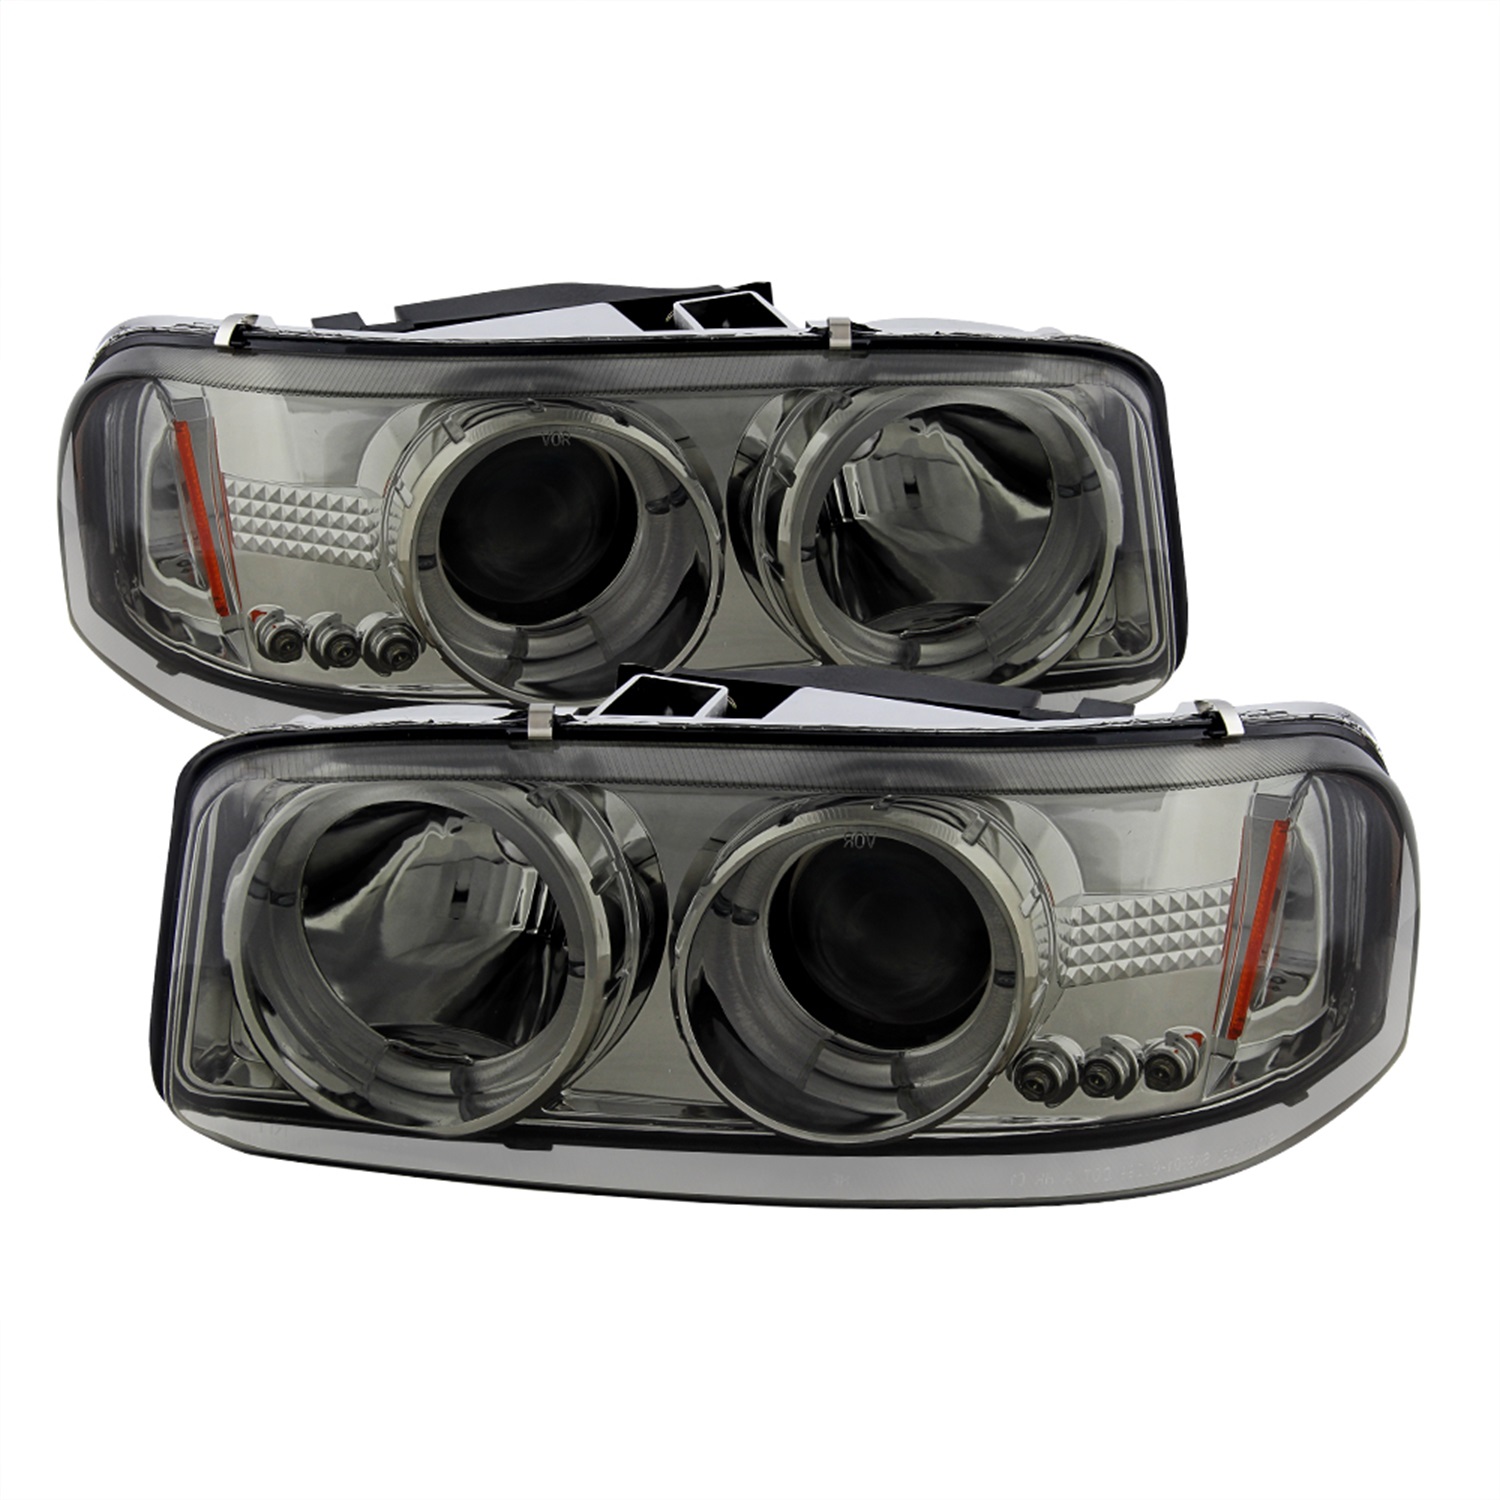 Spyder Auto 5009371 Projector Headlights